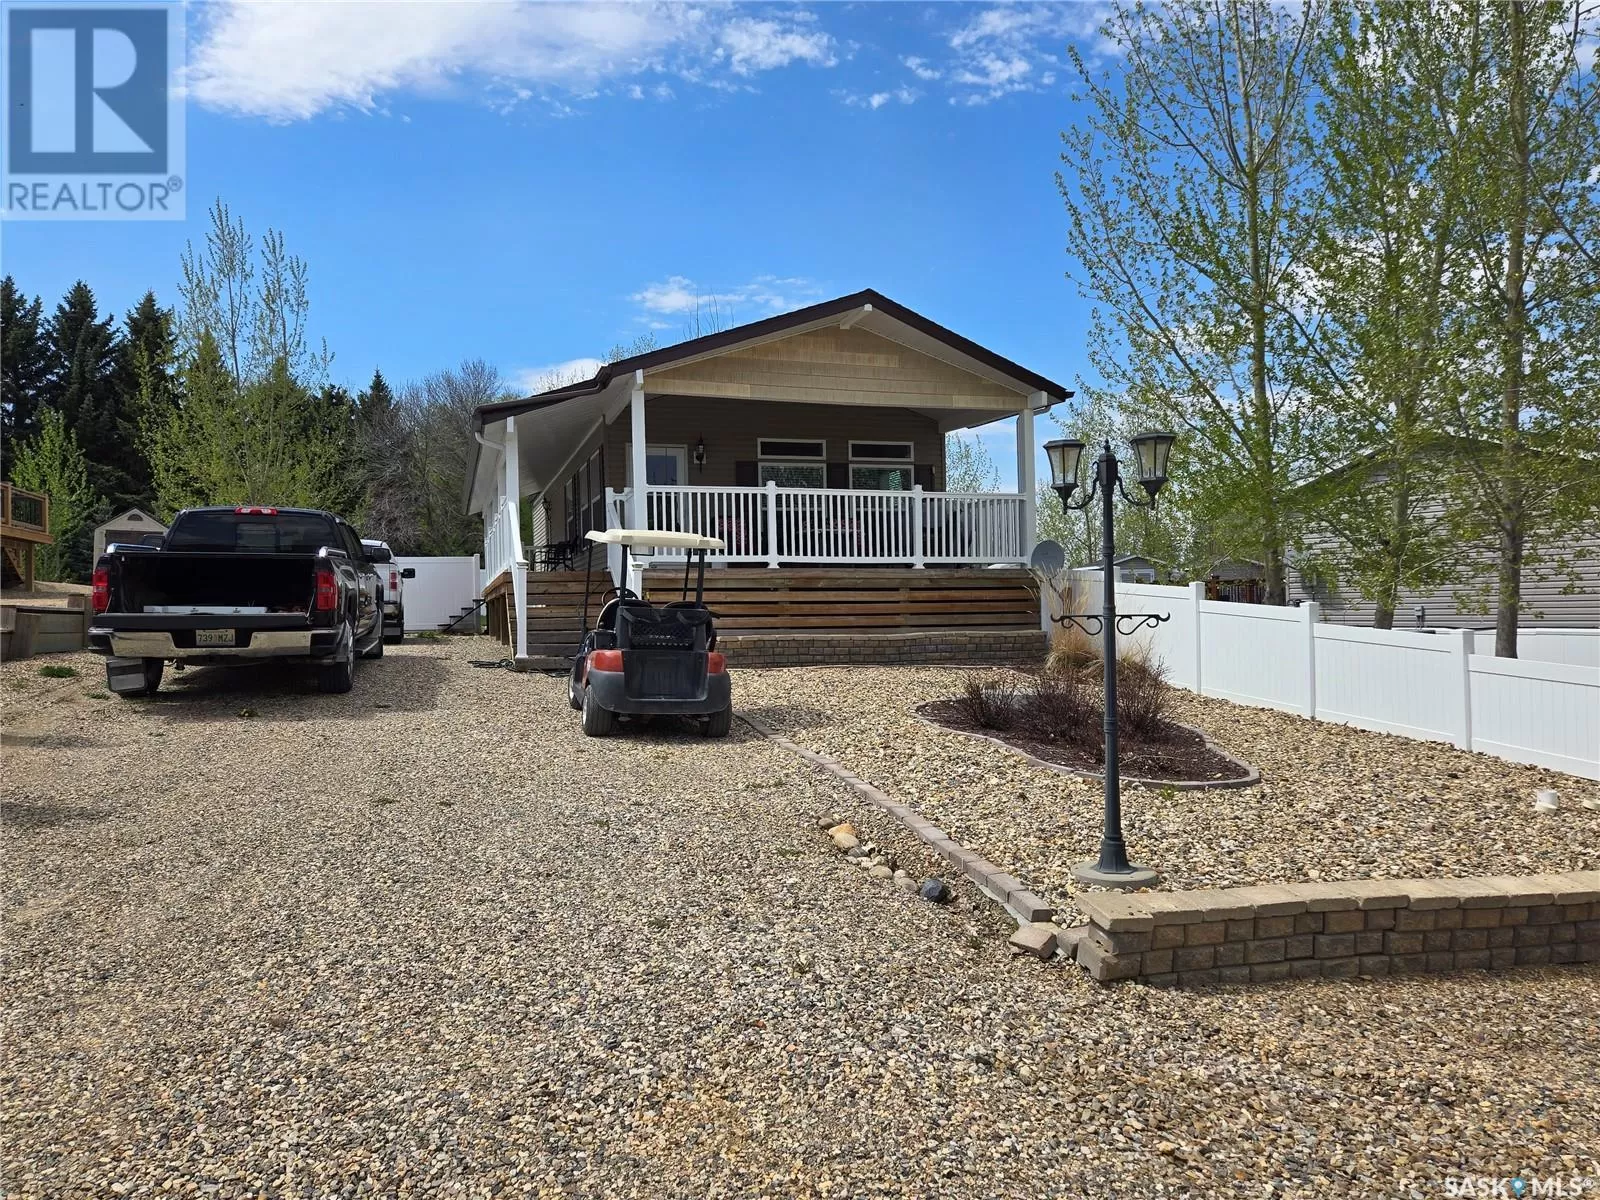 Mobile Home for rent: 33 Finch Crescent, Thomson Lake, Saskatchewan S0H 2K0